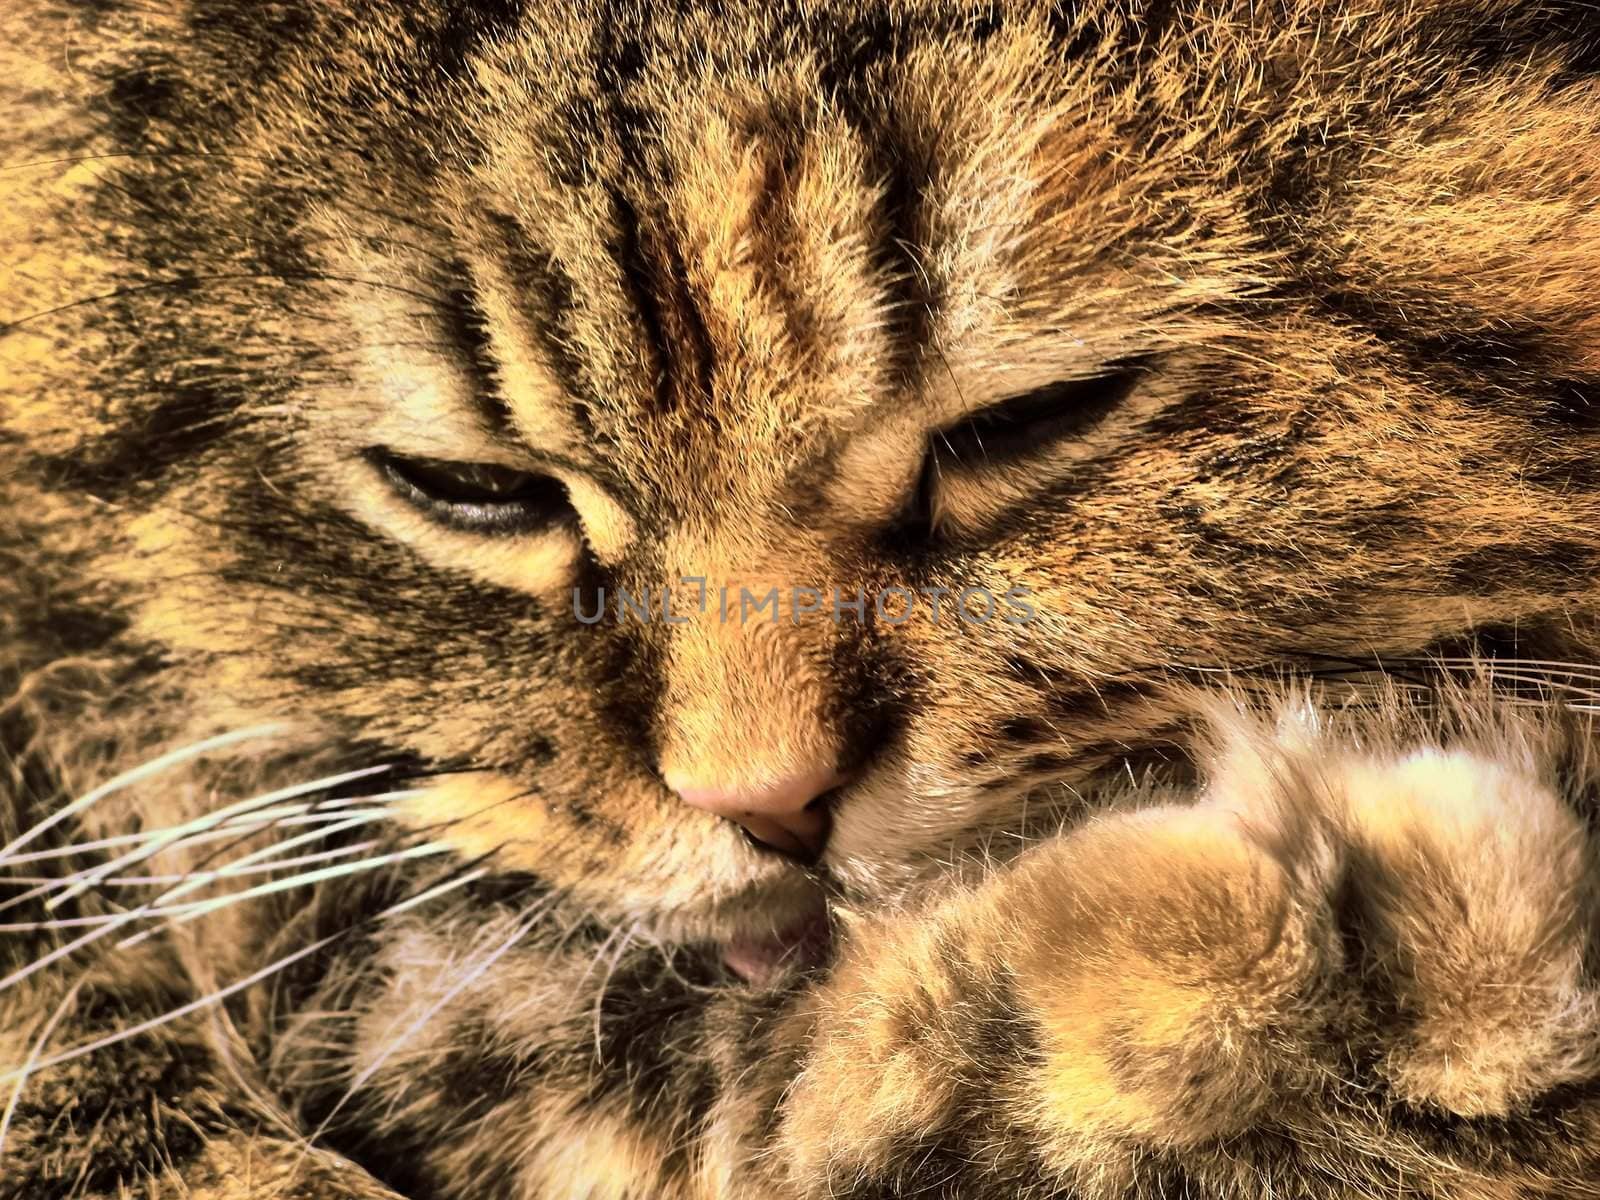 hfri portrait of a nice homeless persian cat